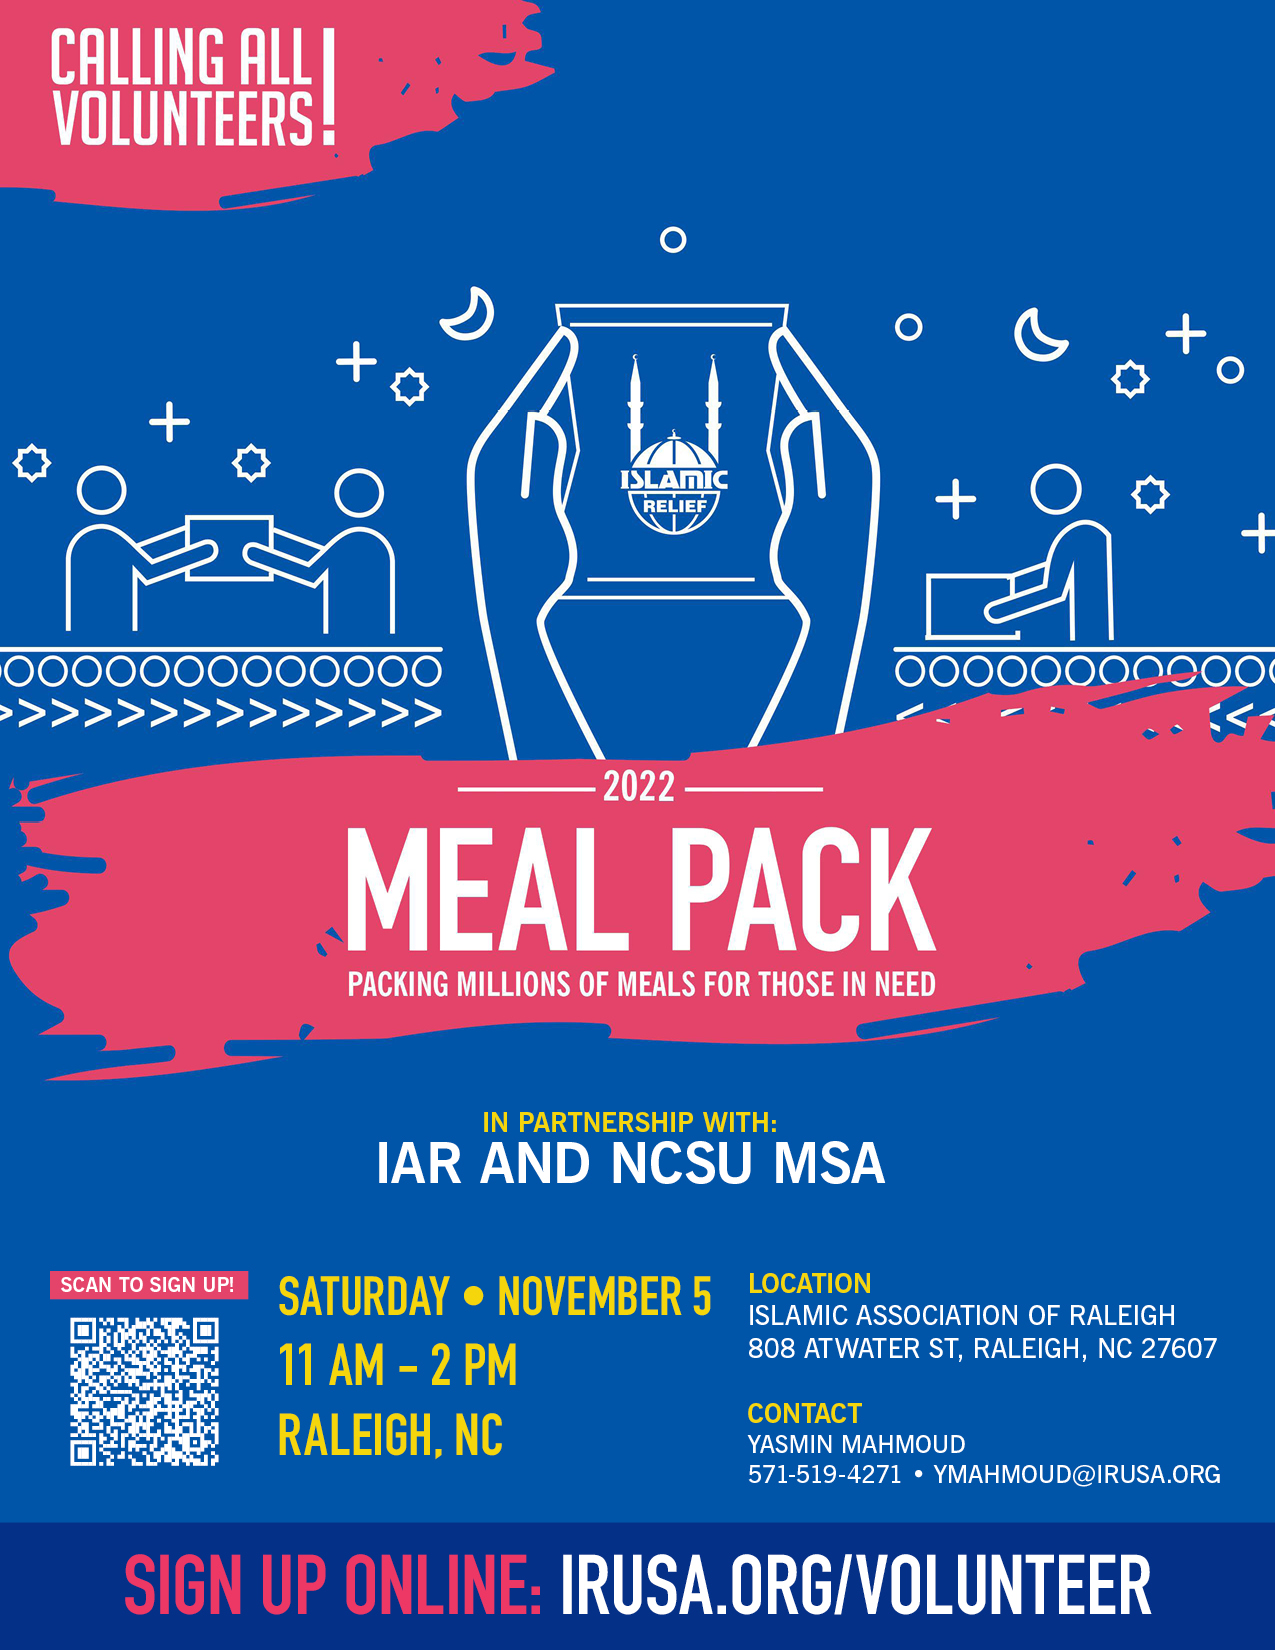 Meal Pack with IRUSA and NCSU MSA